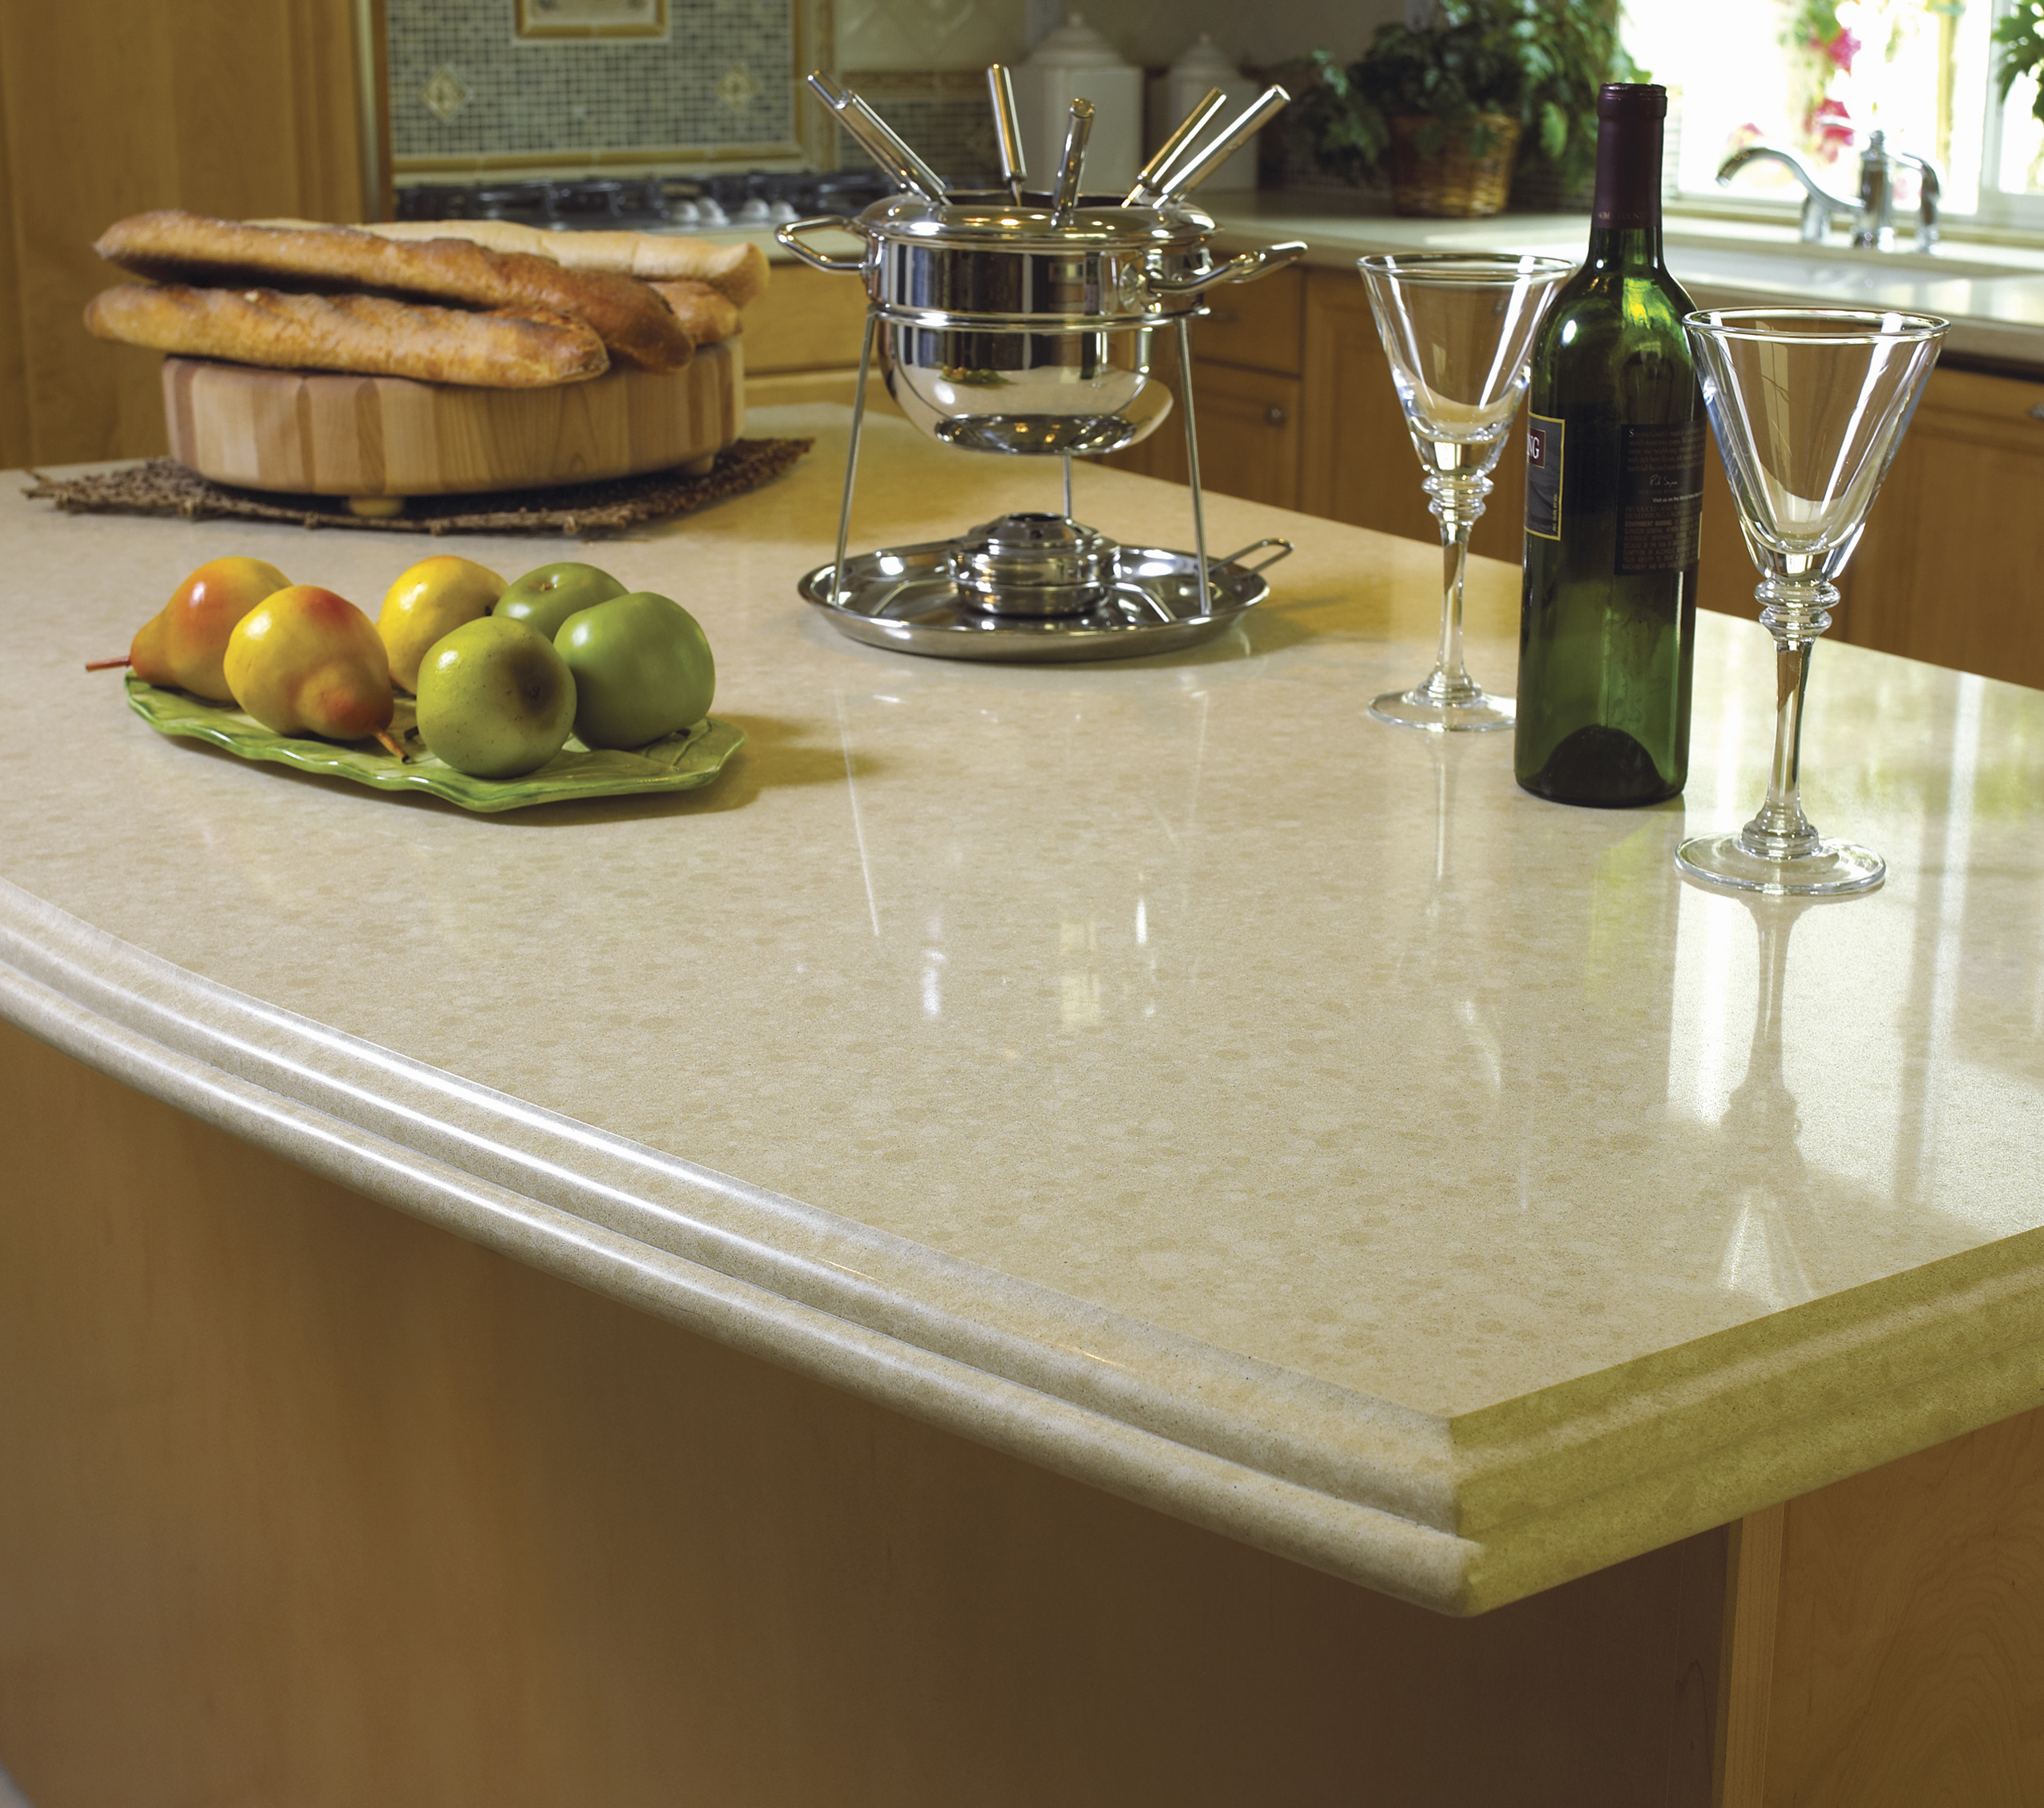 Granite kitchen worktops - Interior Design Inspirations